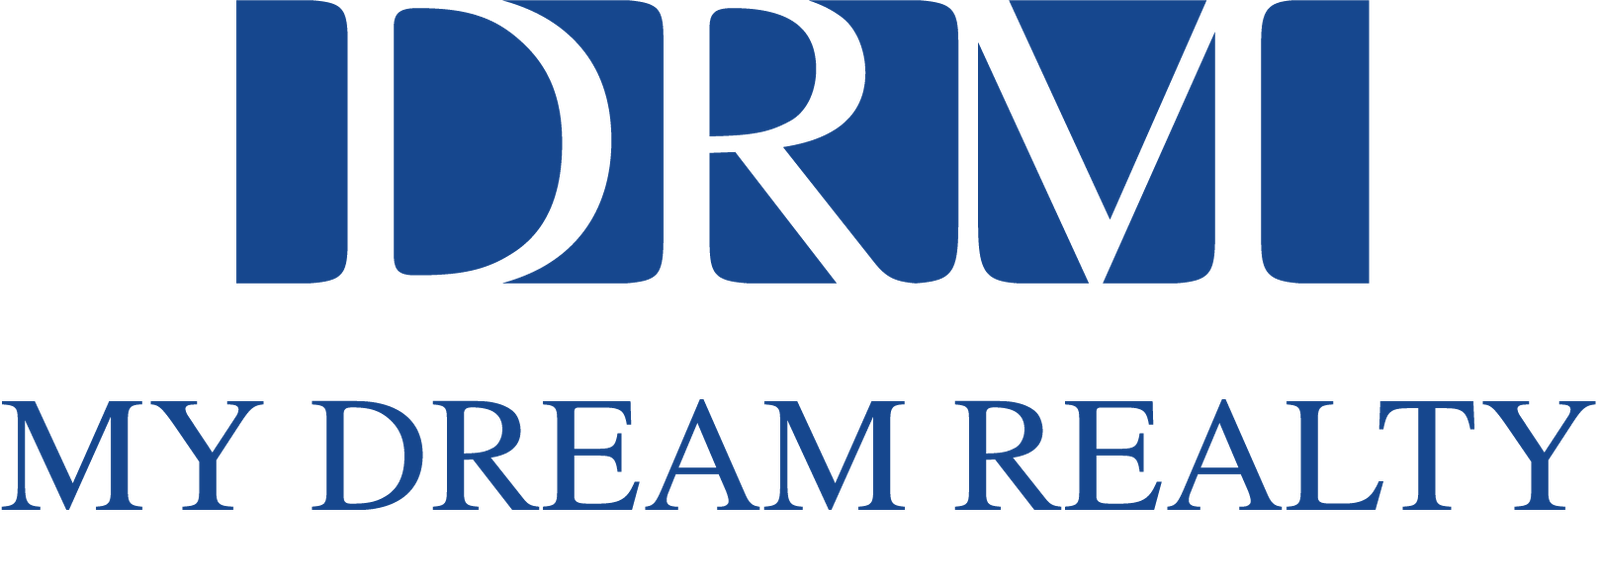 My Dream Realty - Logo